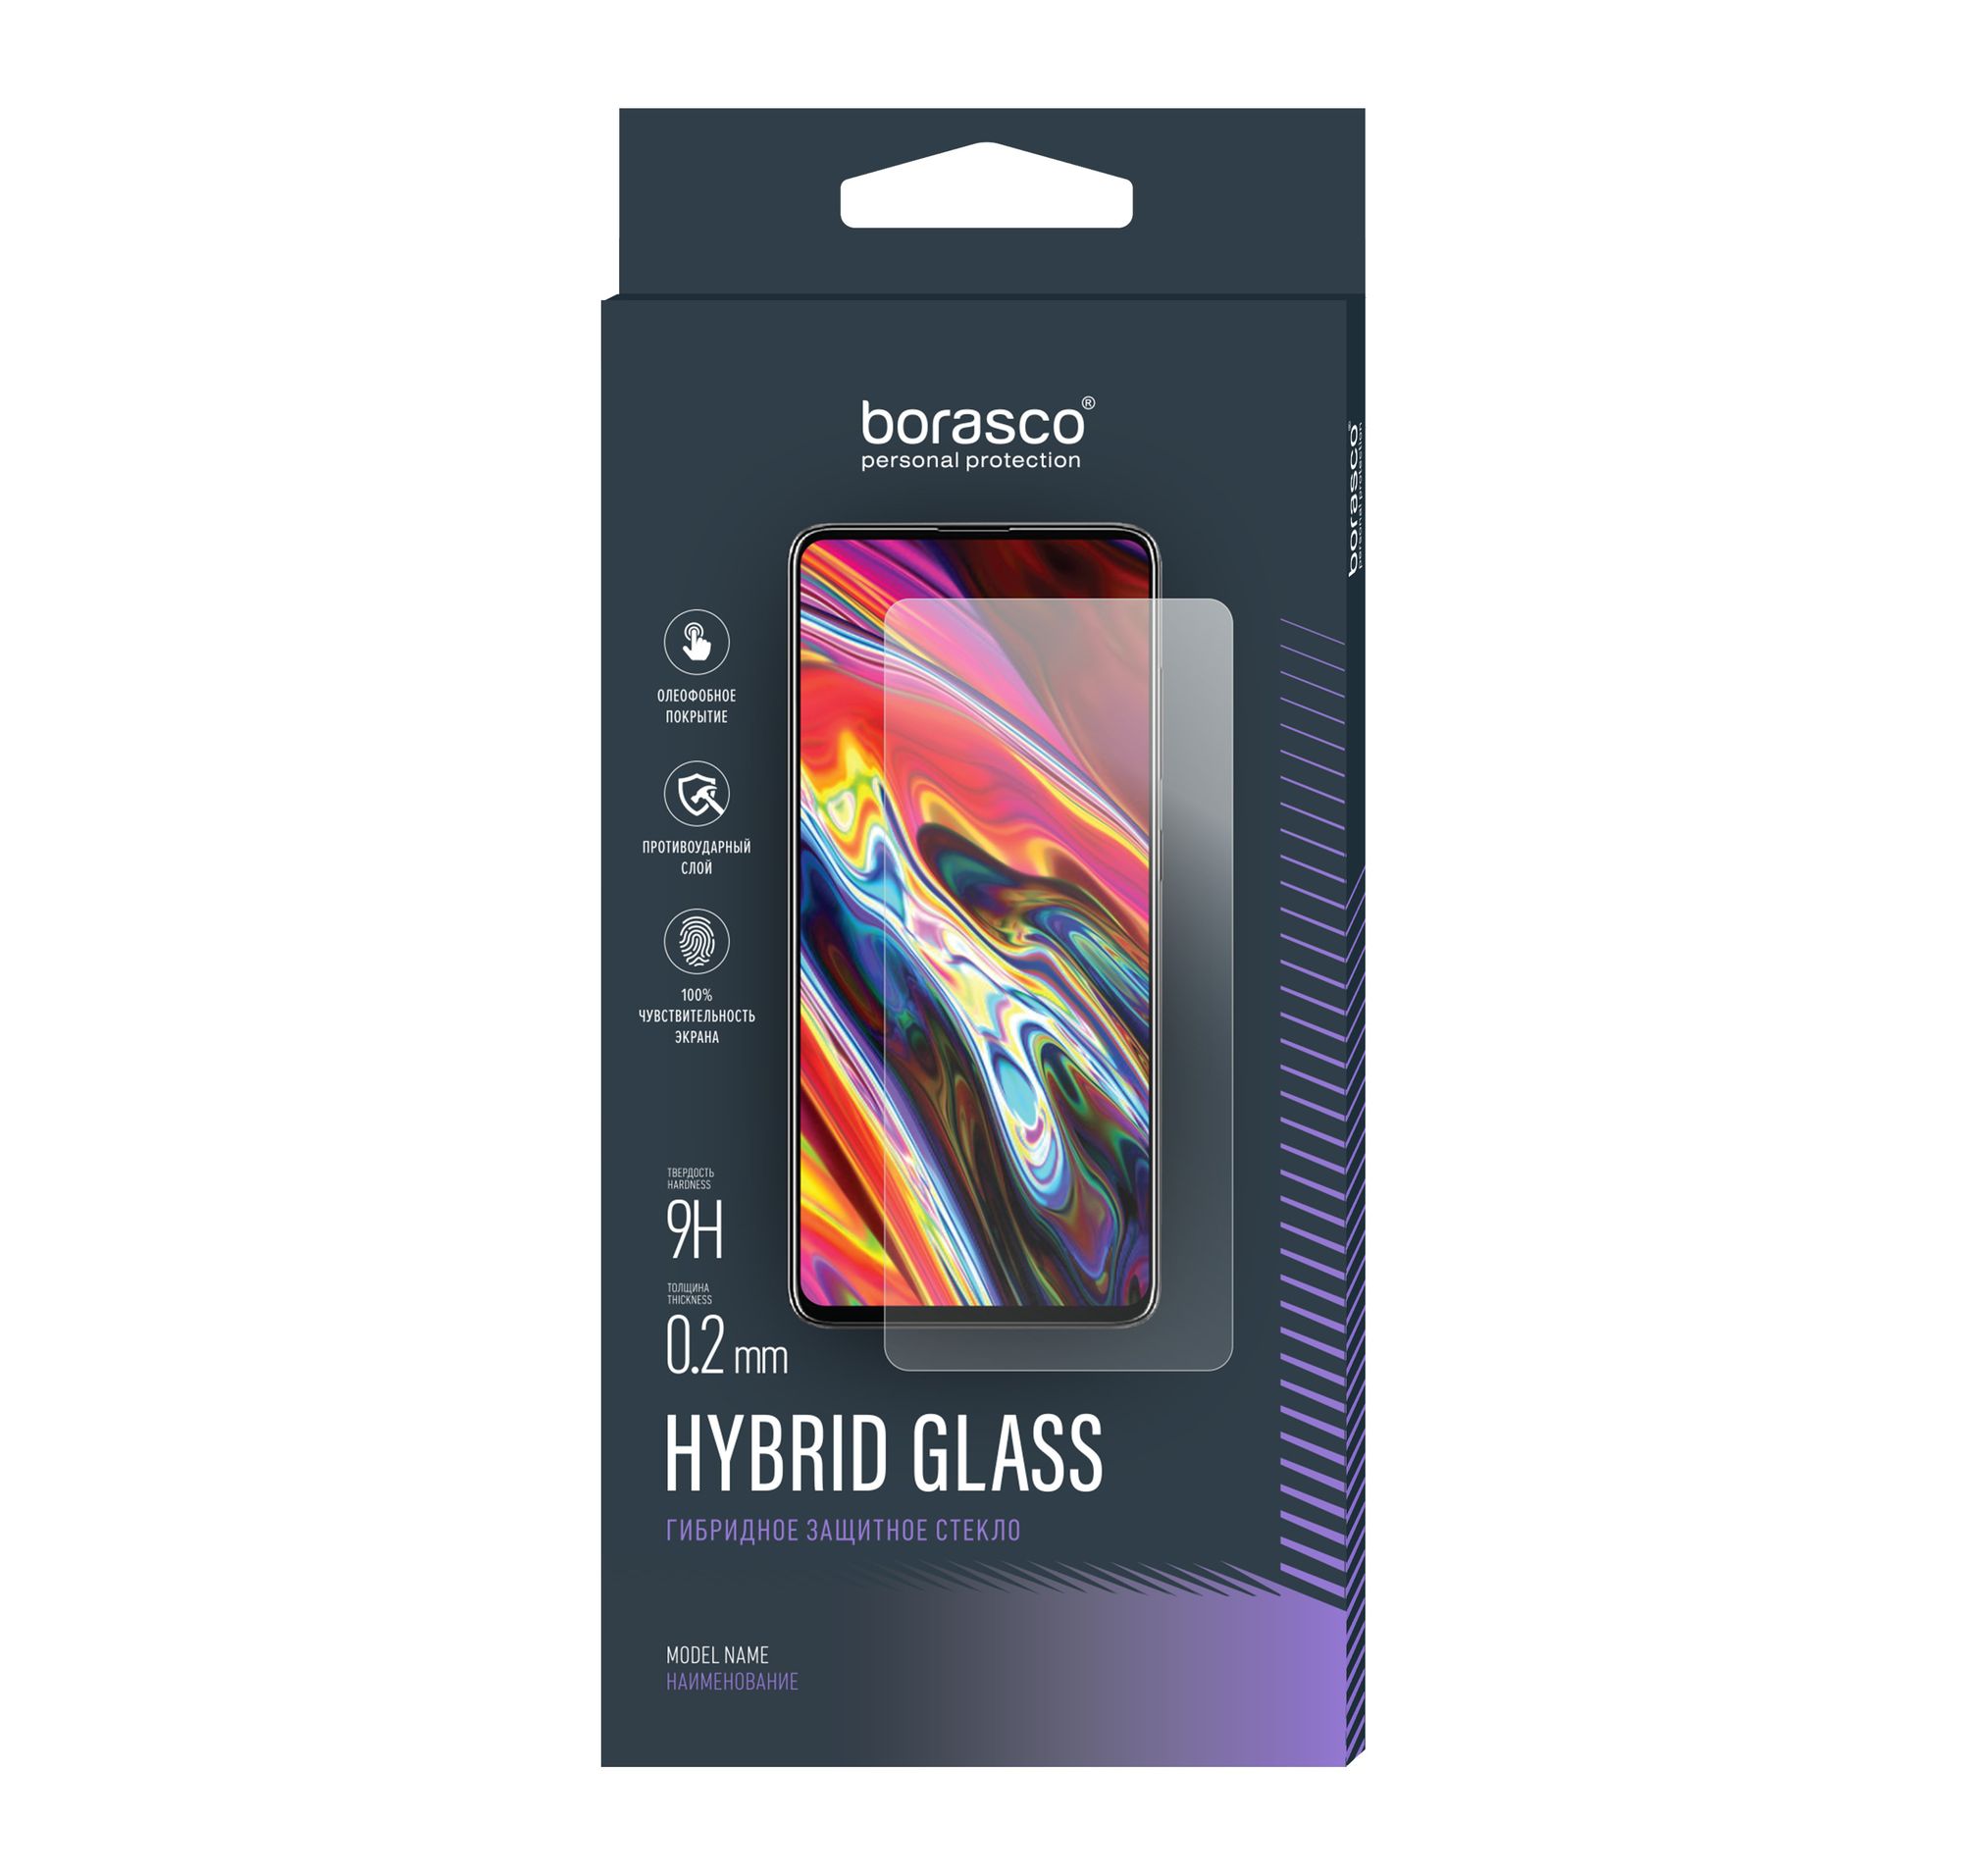 Стекло защитное Hybrid Glass VSP 0,26 мм для Honor 6C Pro / V9 Play силиконовый чехол на honor 6c pro хомяки для хонор 6ц про